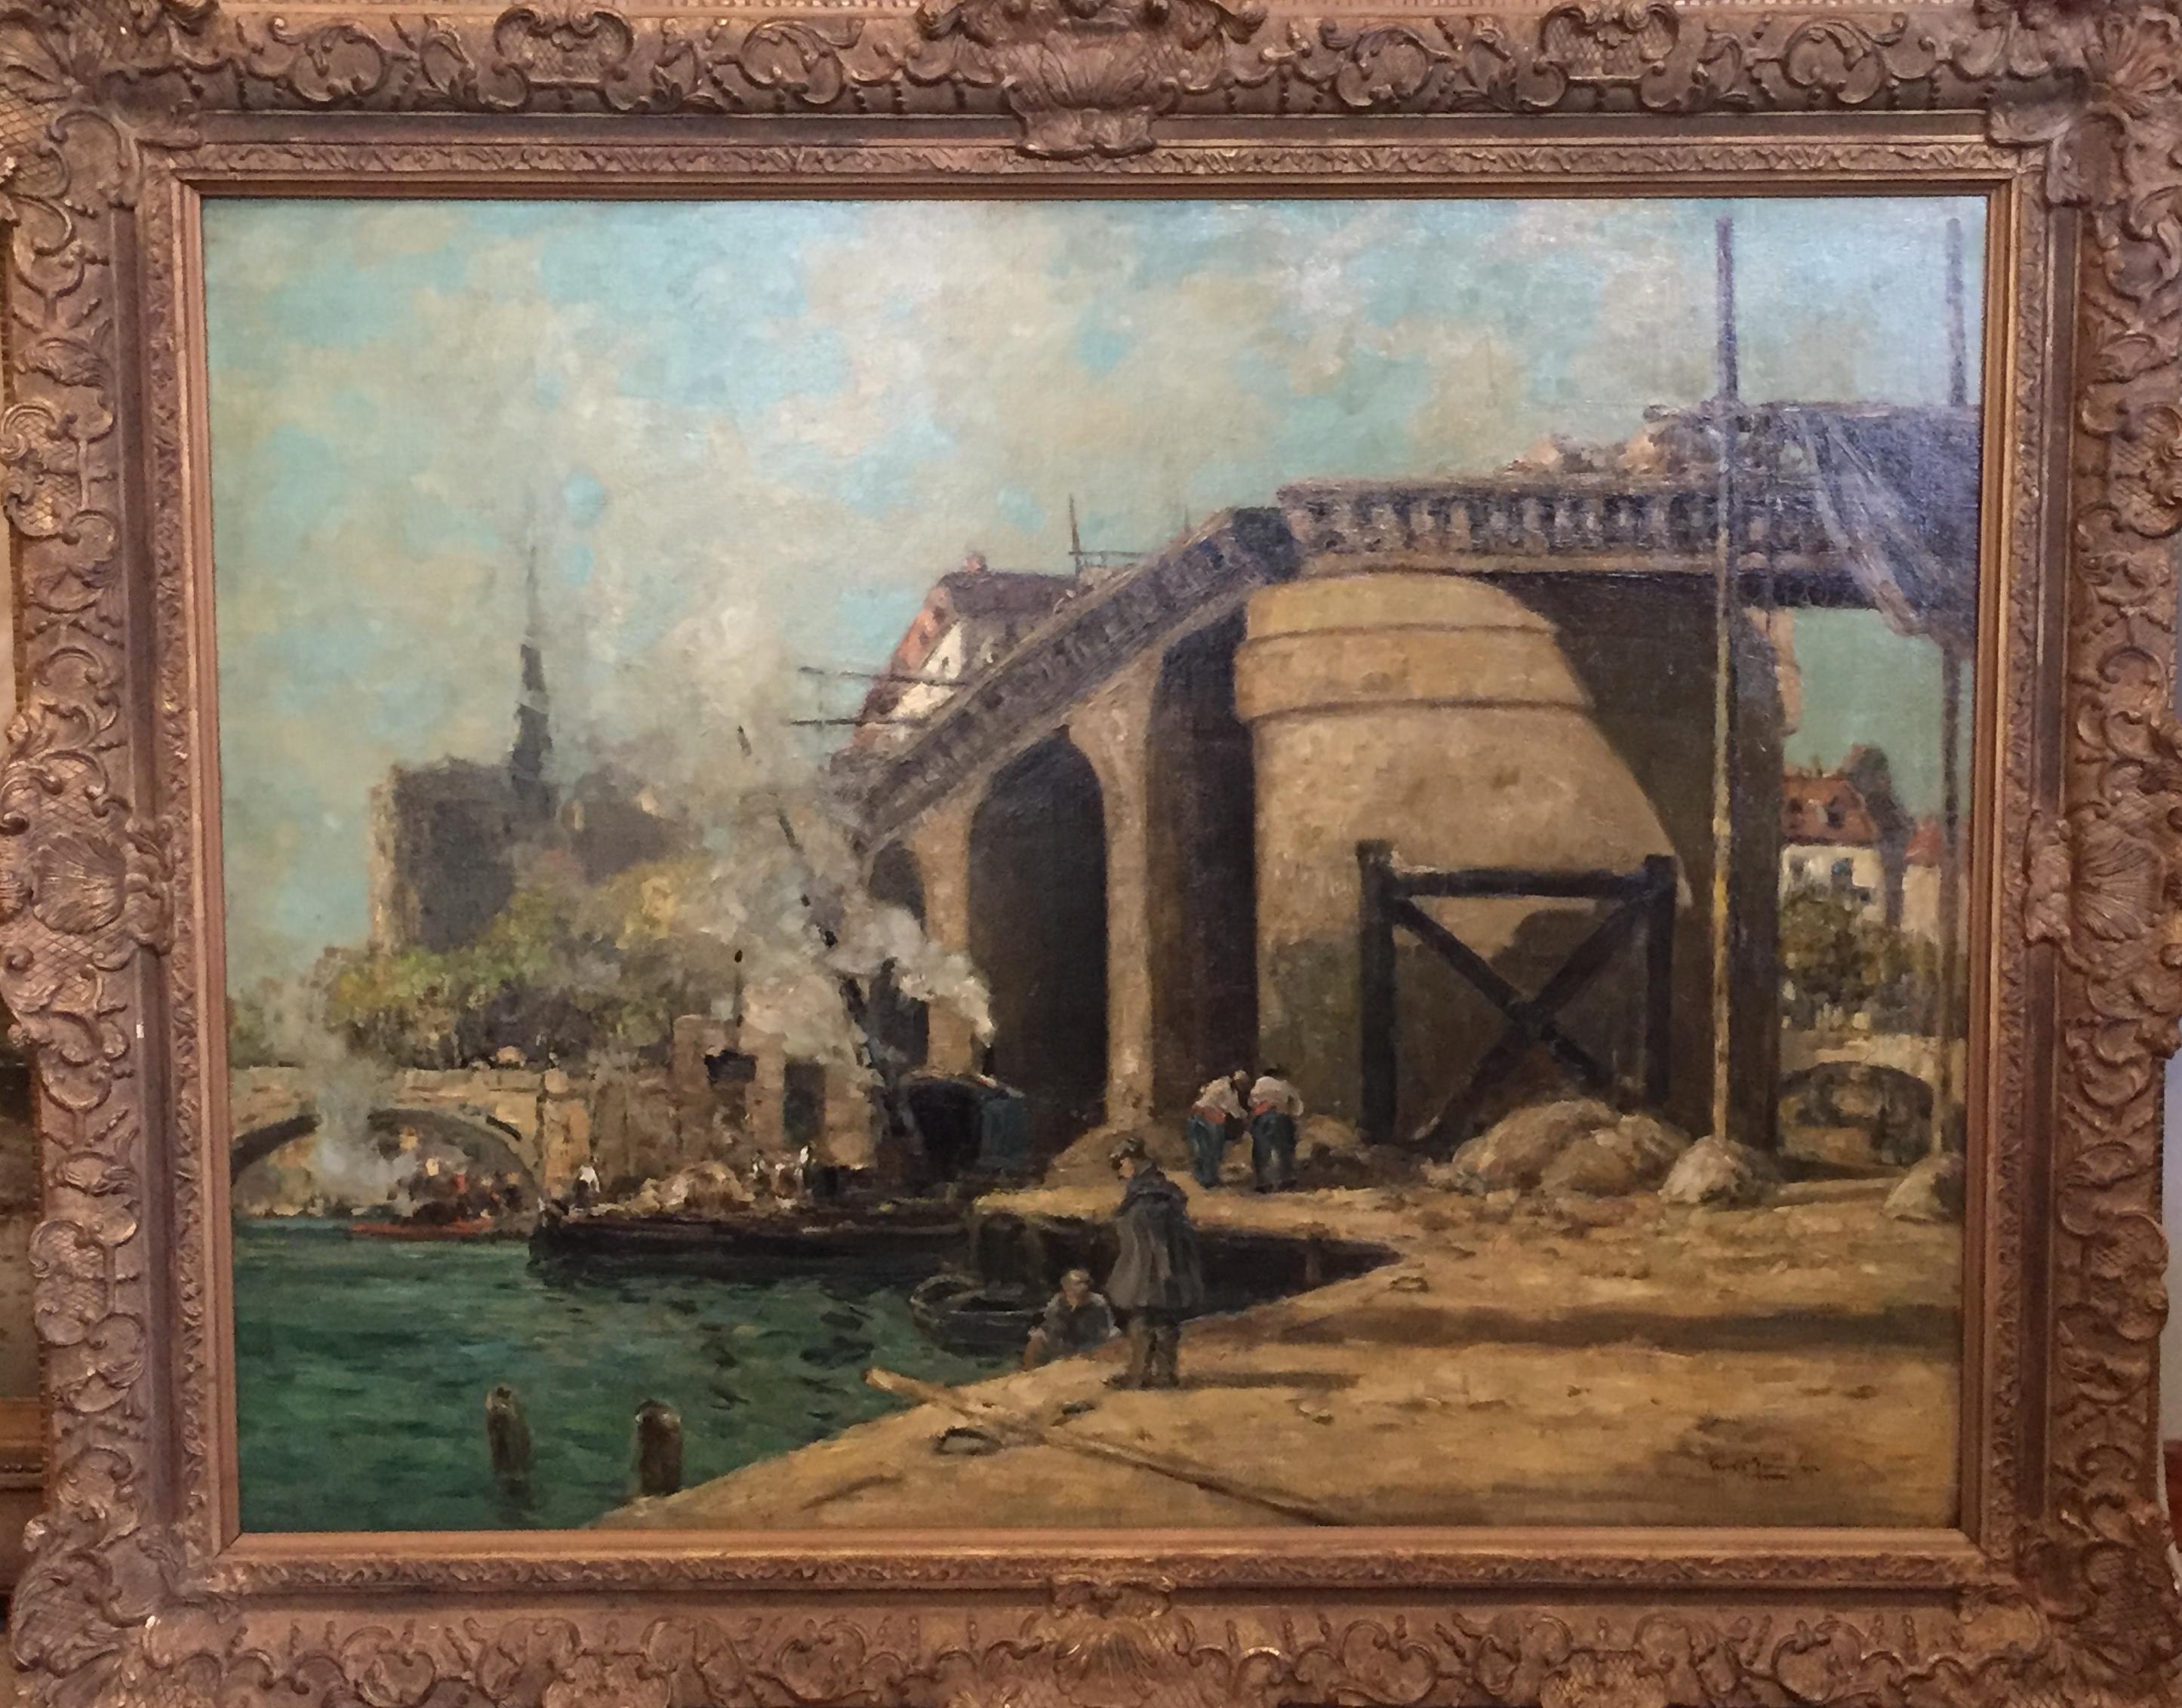 Unknown Landscape Painting - "Bridge Over the Seine, Paris" - Framed Large 19th-Century French Landscape